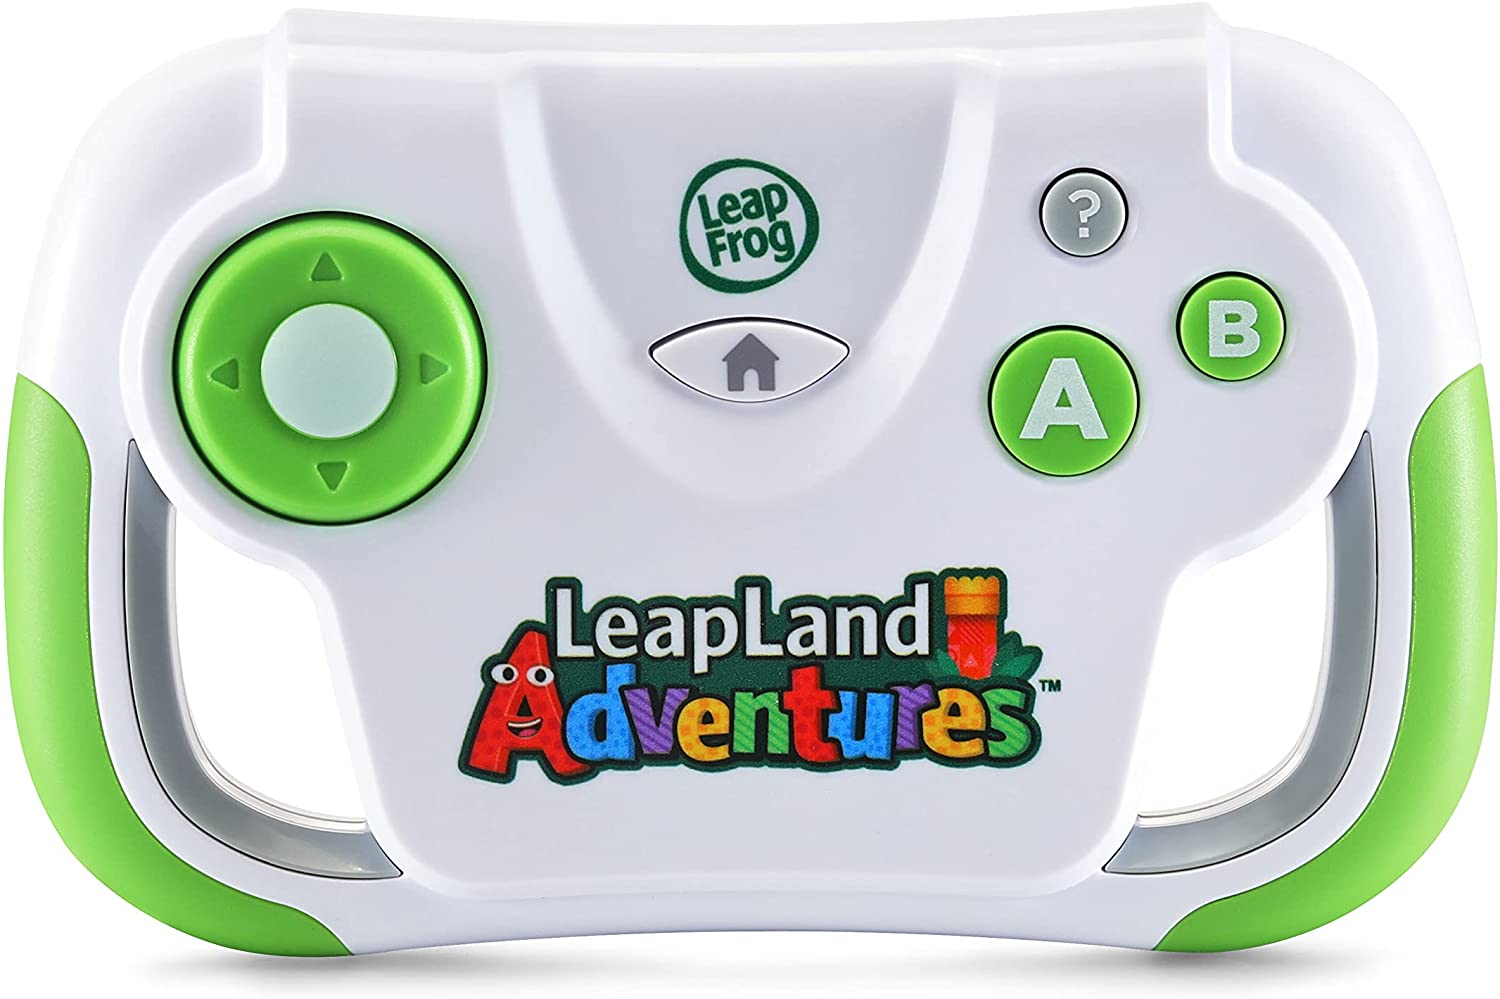 LeapFrog Leapland Adventures